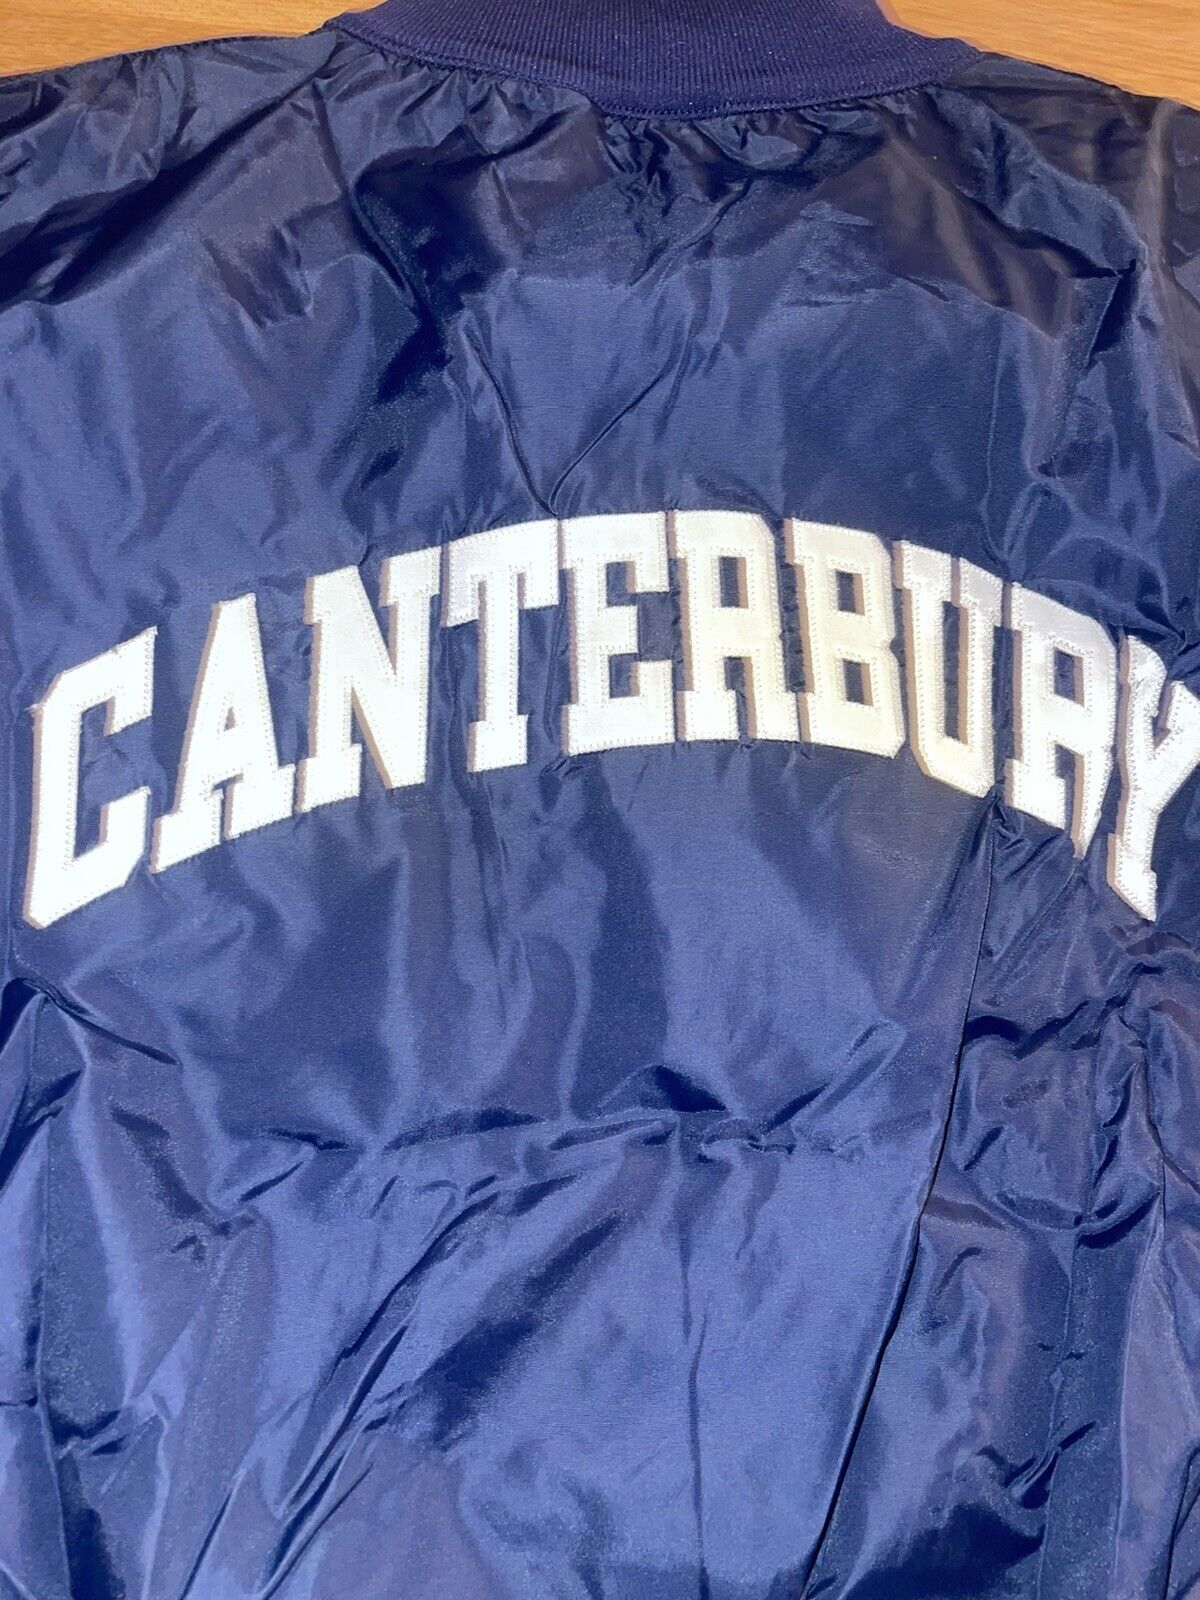 Vintage canterbury jacket - Gem